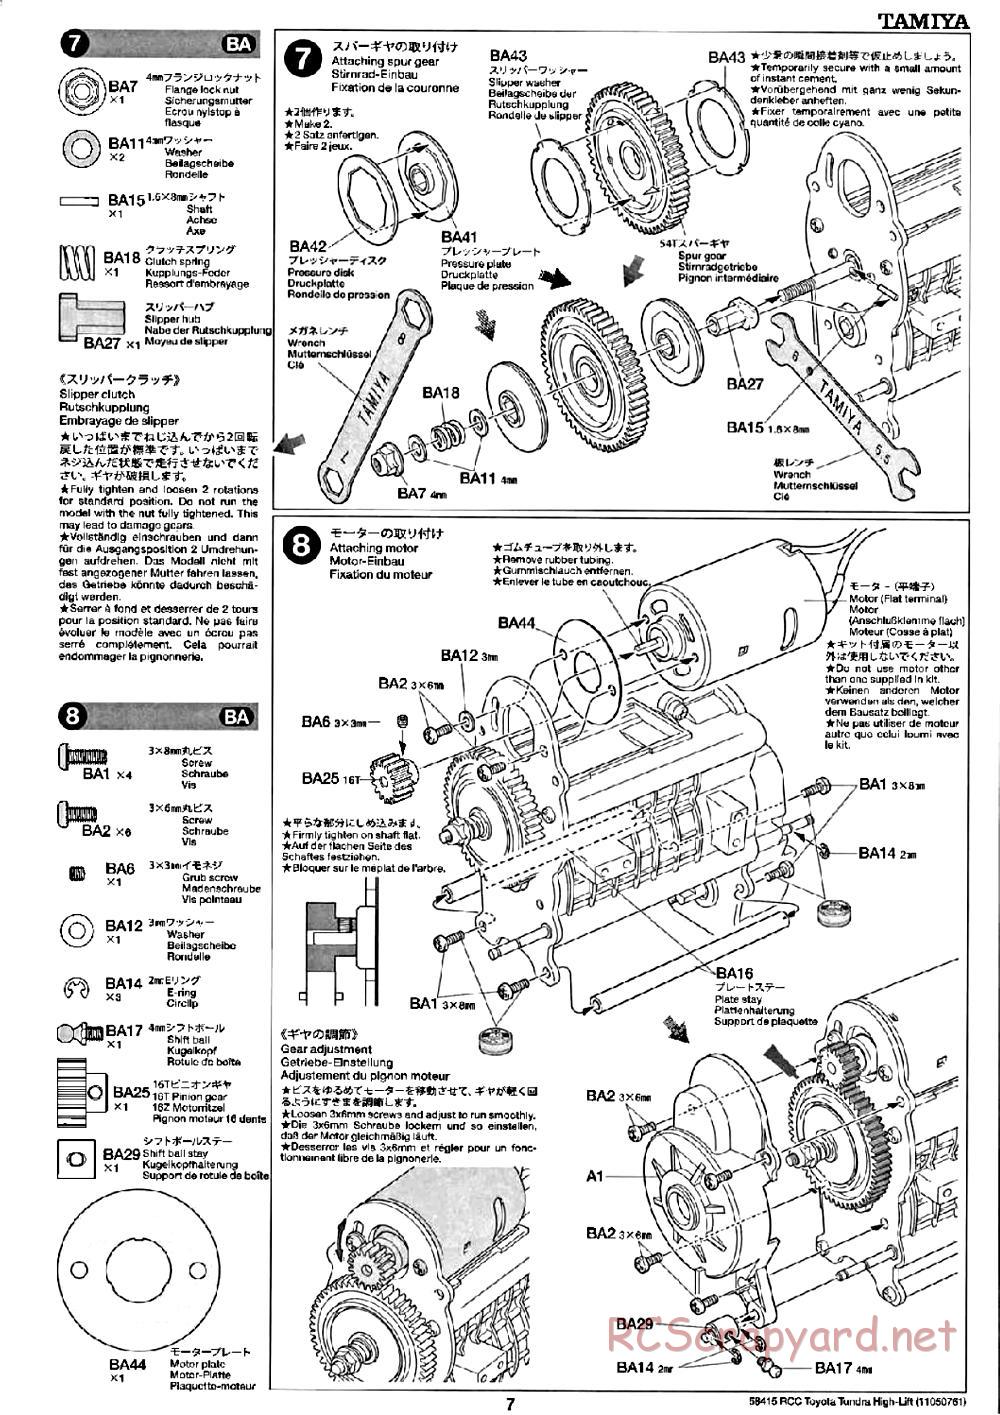 Tamiya - Toyota Tundra High-Lift Chassis - Manual - Page 7